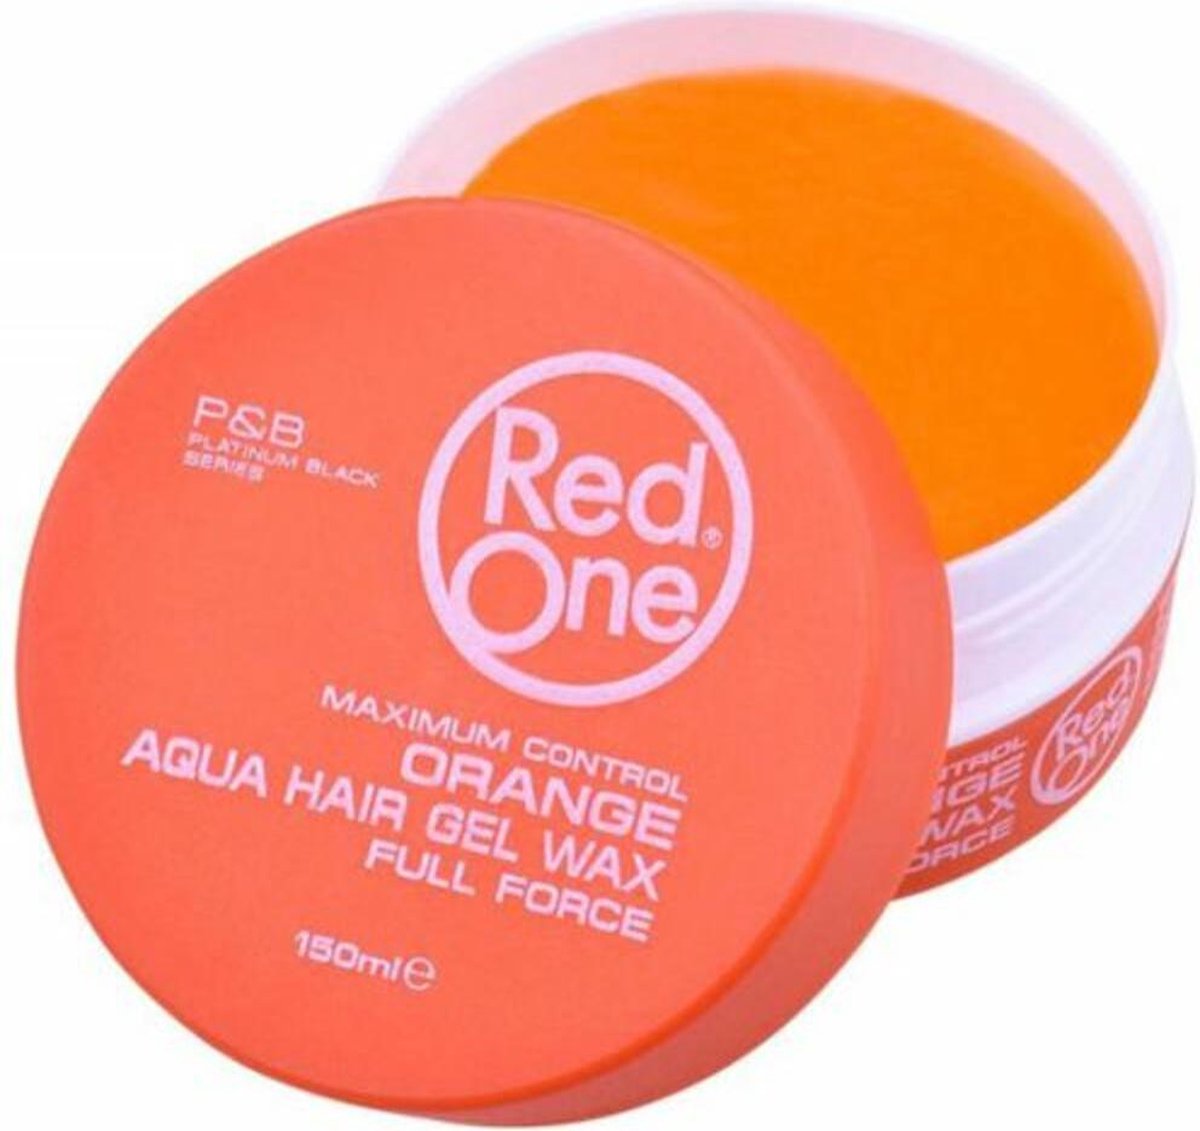 RedOne Haarwax - Orange Aqua Hair Gelwax 150ml